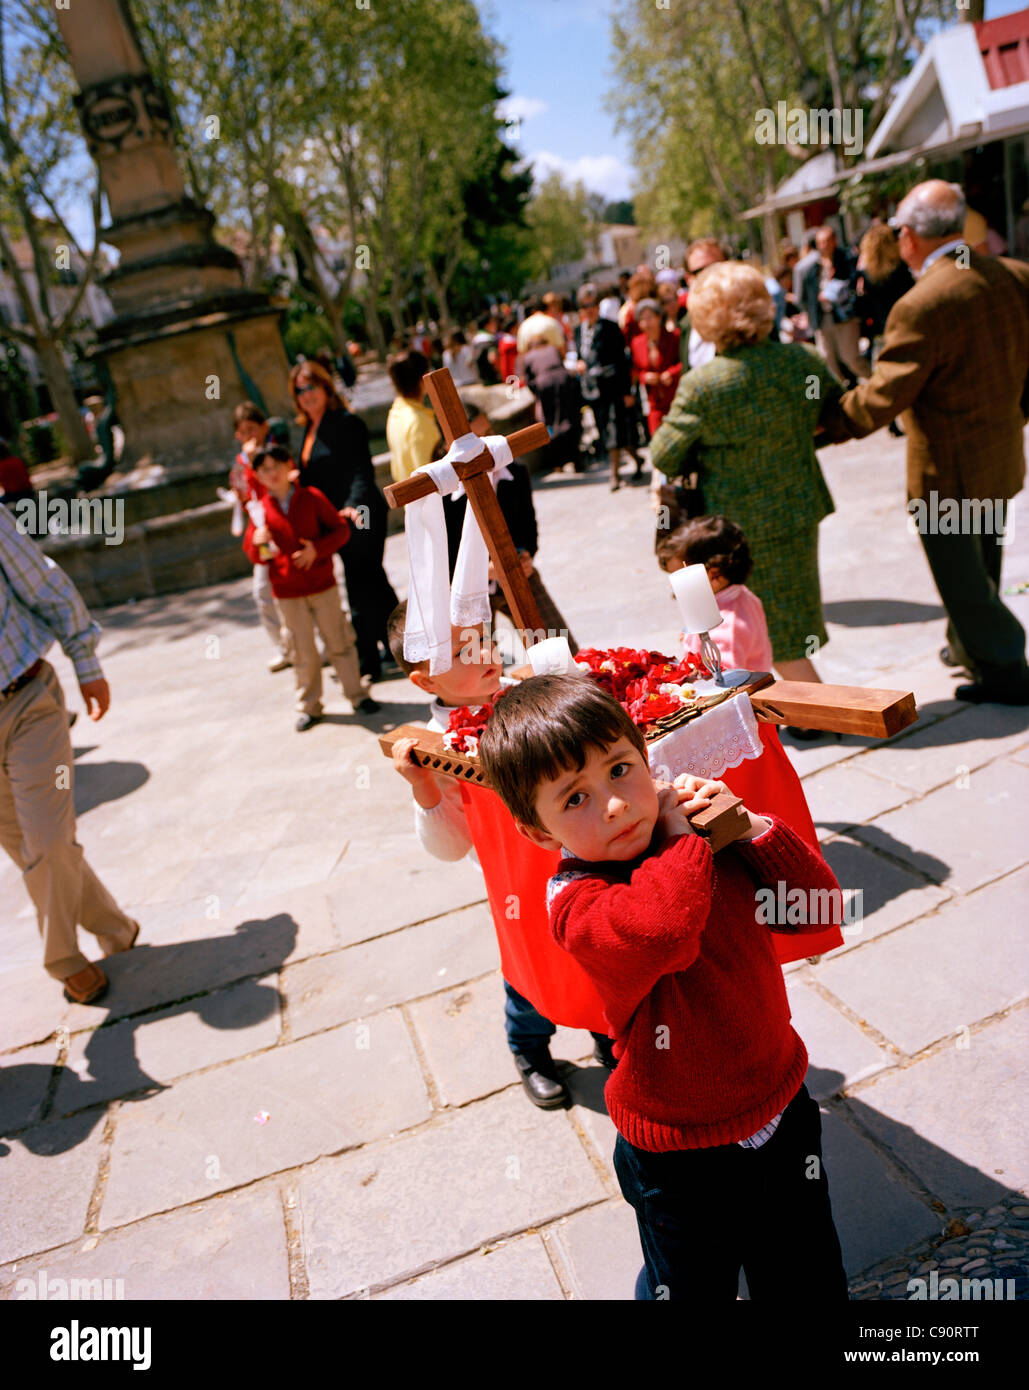 Kids carrying litter with cross, Cruzes de Mayo celebration, Baeza, Andalusia, Spain Stock Photo